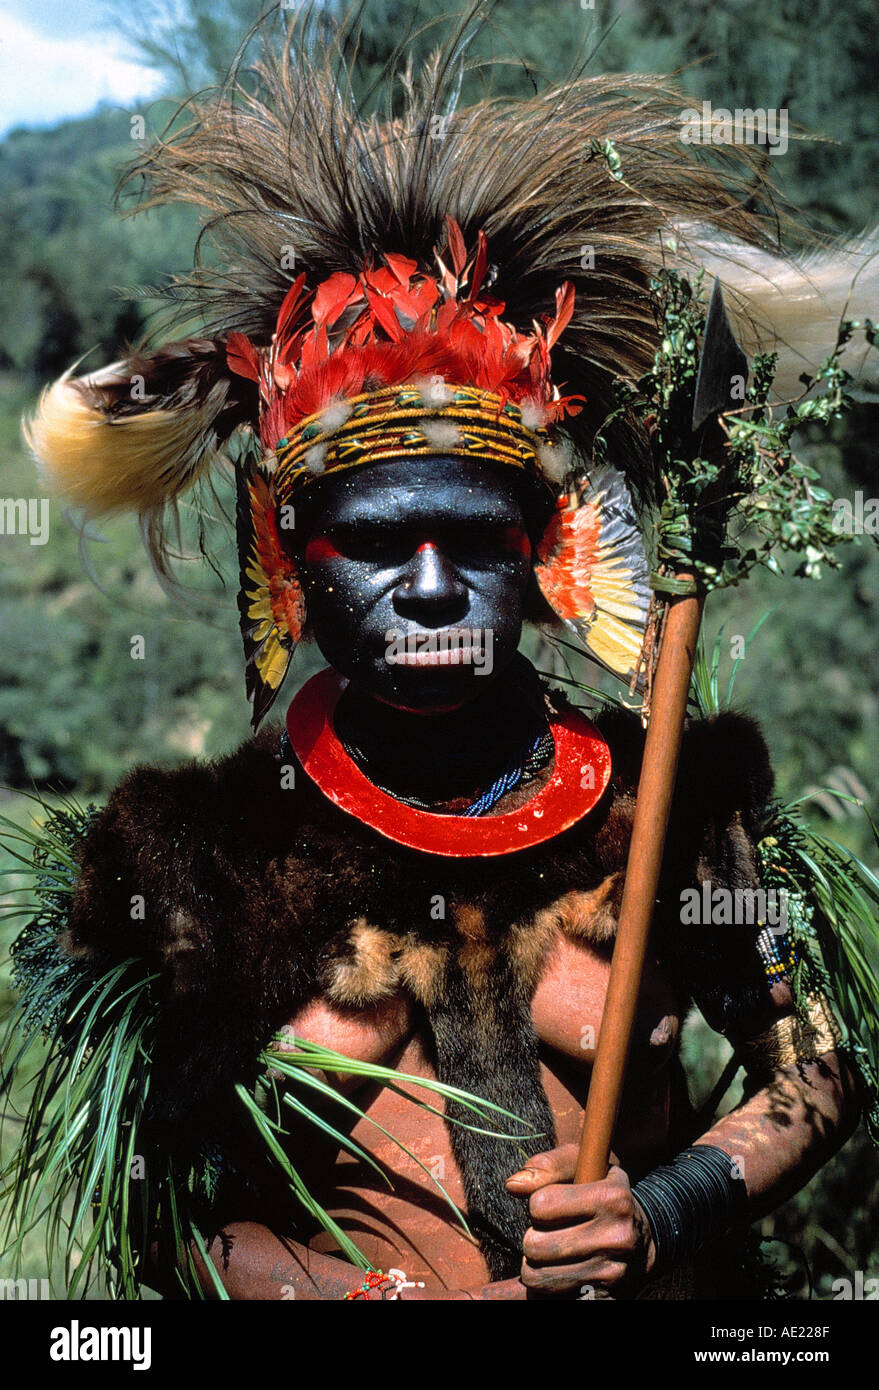 tribesman portrait region of southern highlands papua new guinea Stock Photo